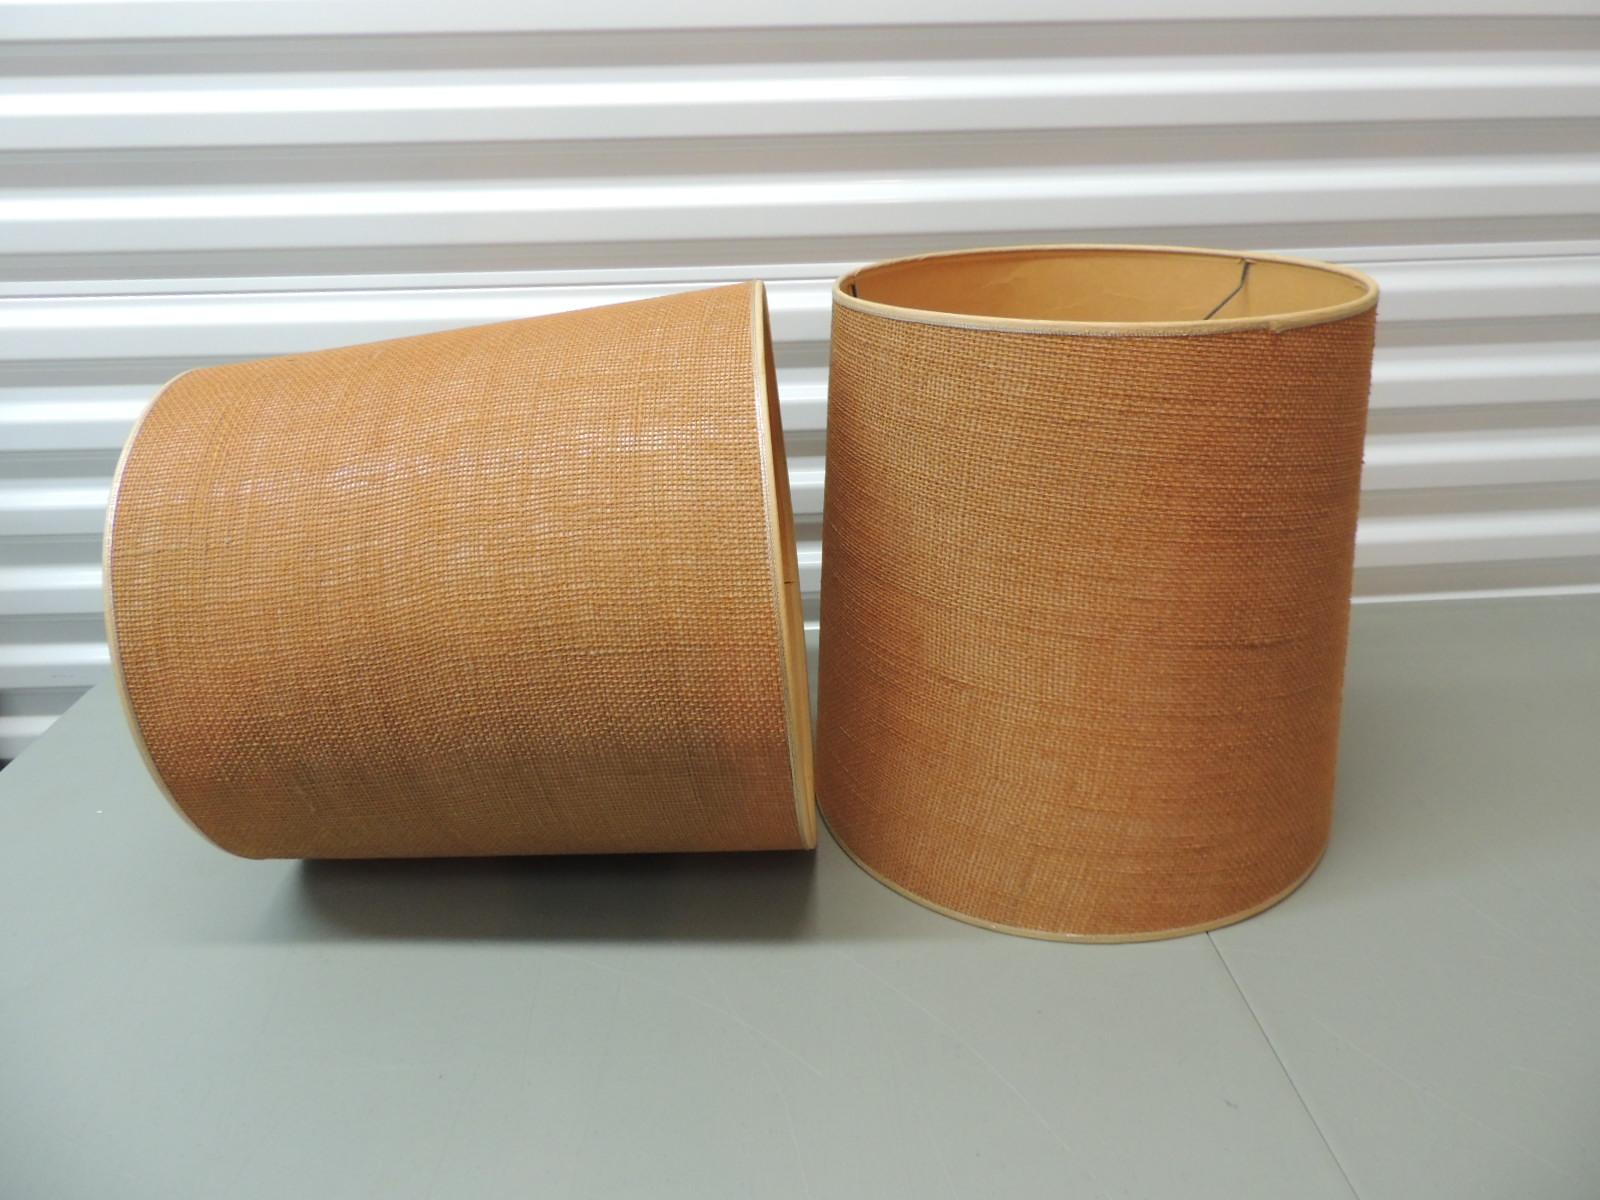 Pair of tan color vintage burlap lamp shades
Size: 13